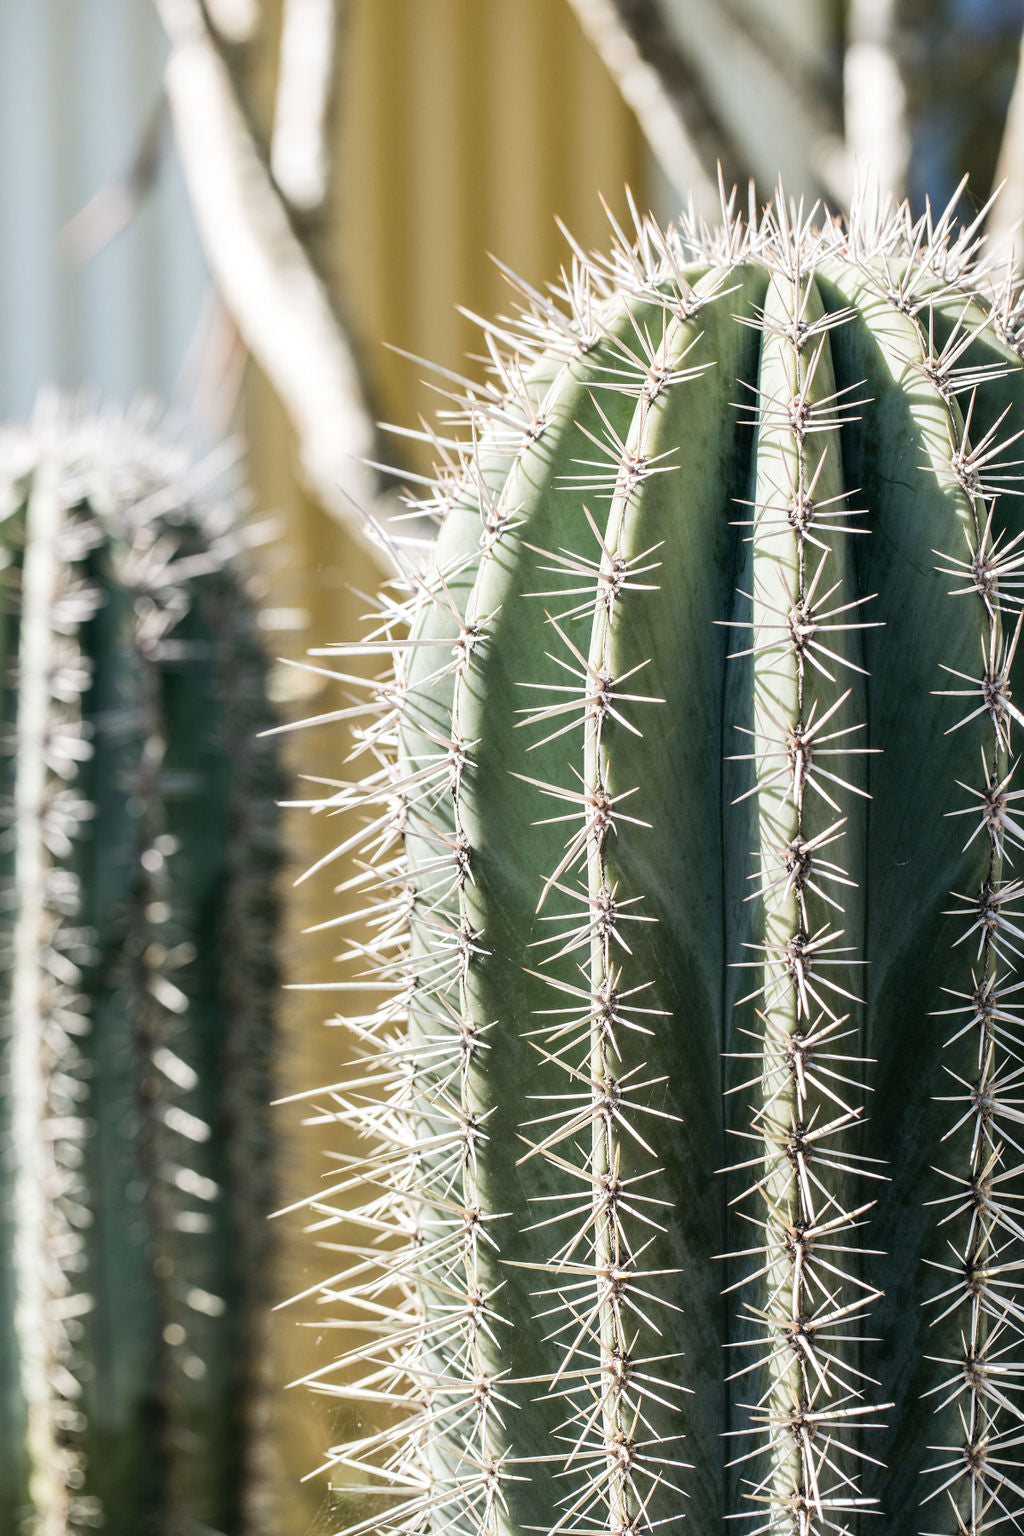 Mexican Giant Cactus (Pachycereus pringlei)